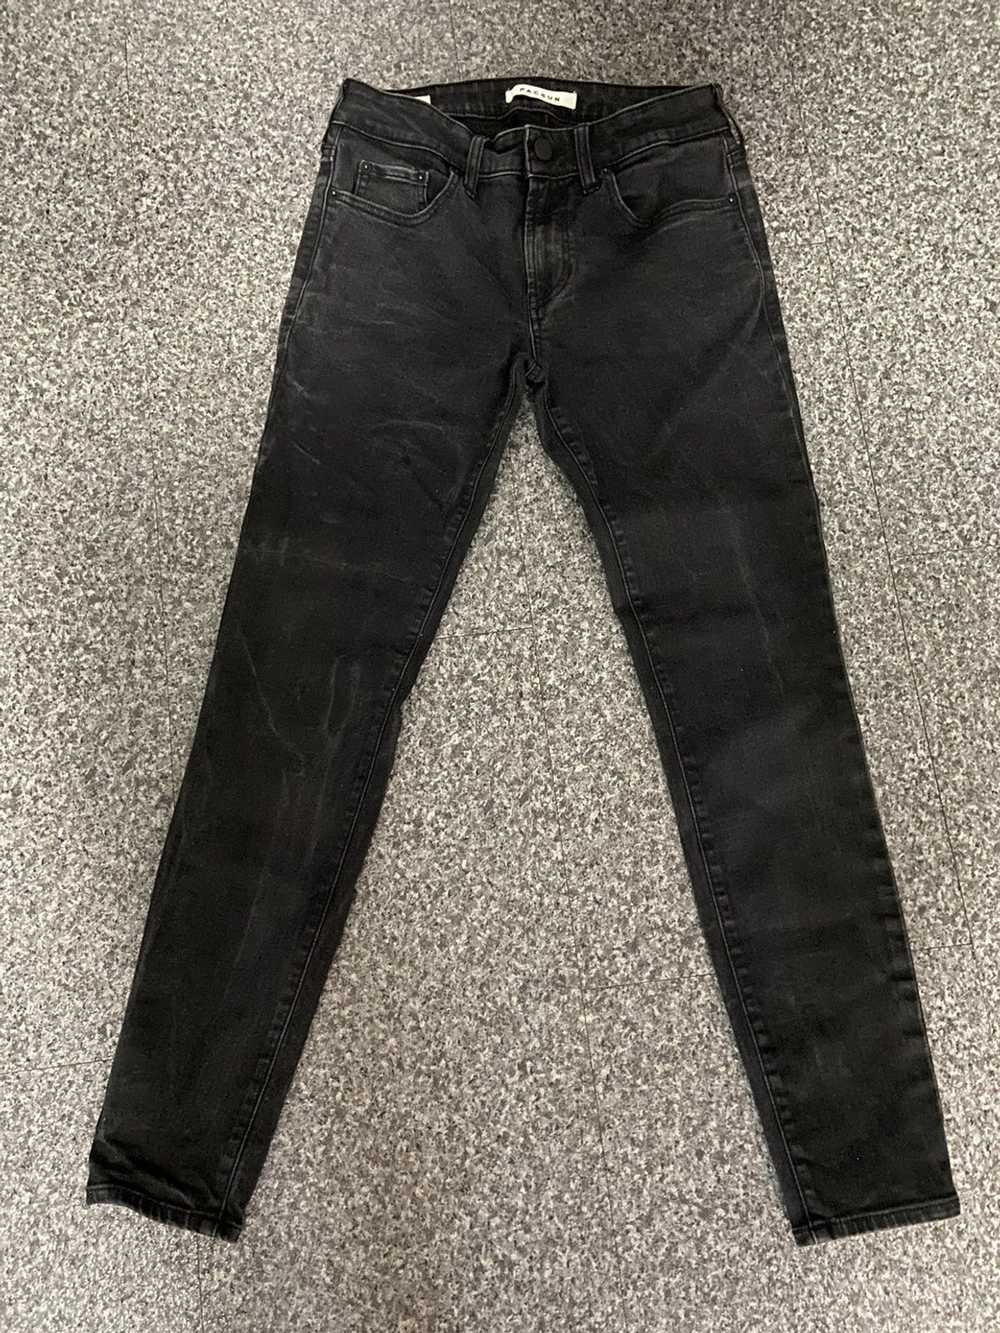 Pacsun Pacsun Black skinny Jeans-Sz(29x30) - image 1